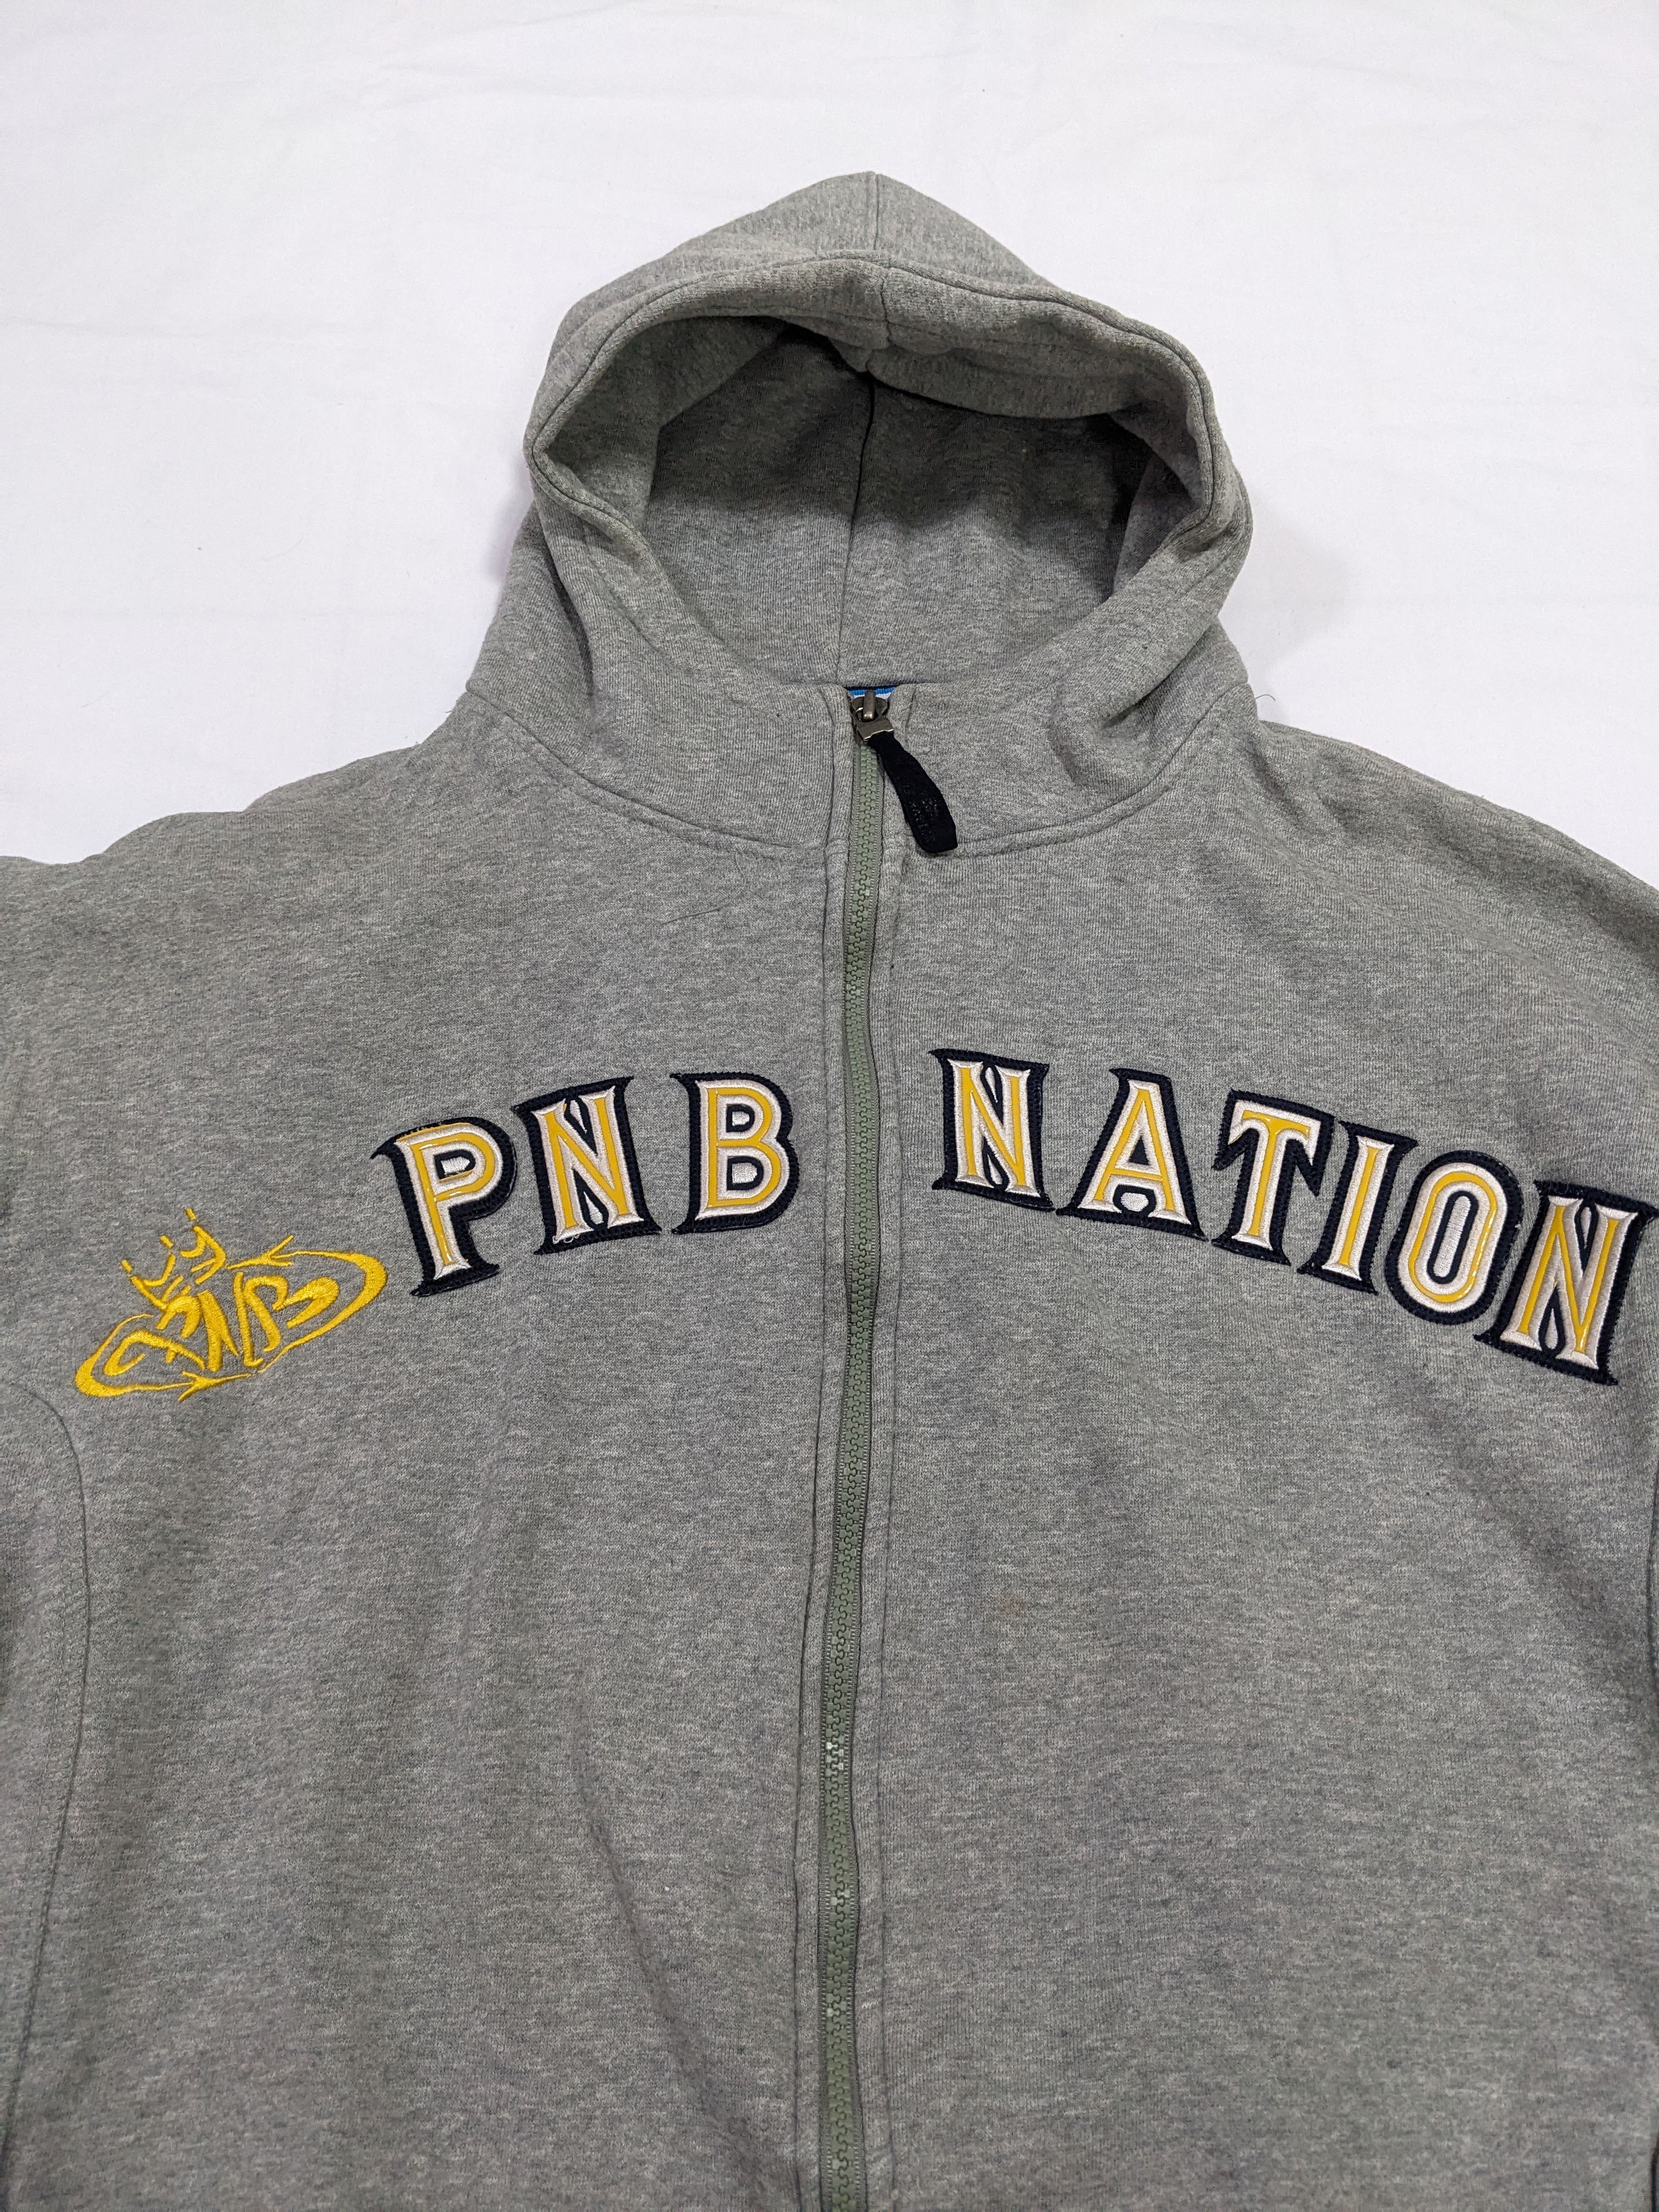 Vintage - PNB NATION Hip Hop Graffiti Gray Hooded Zip Up Jacket - 3